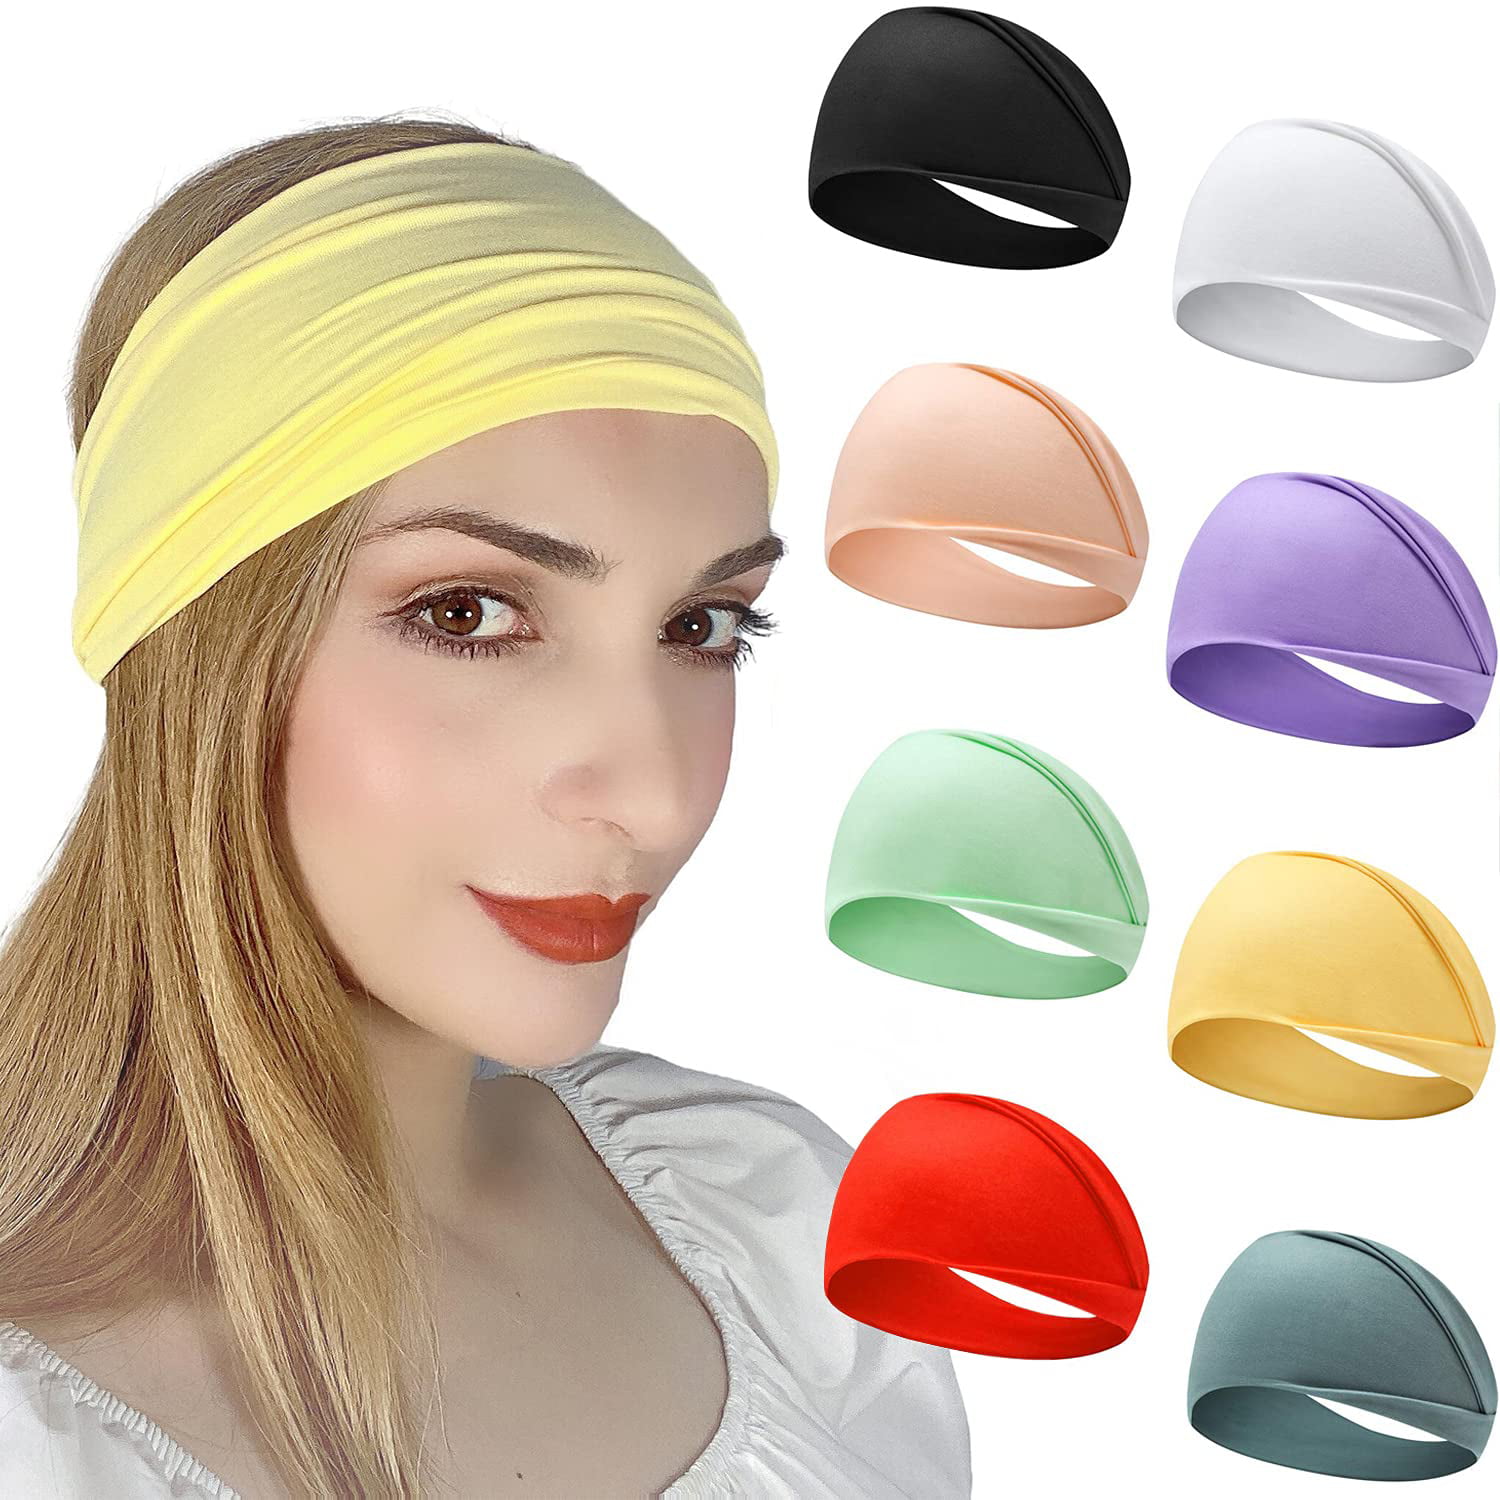 Elastic Bandana Women Headbands Head Wrap Hair Accessorie for Yoga Running Hiking Cycling